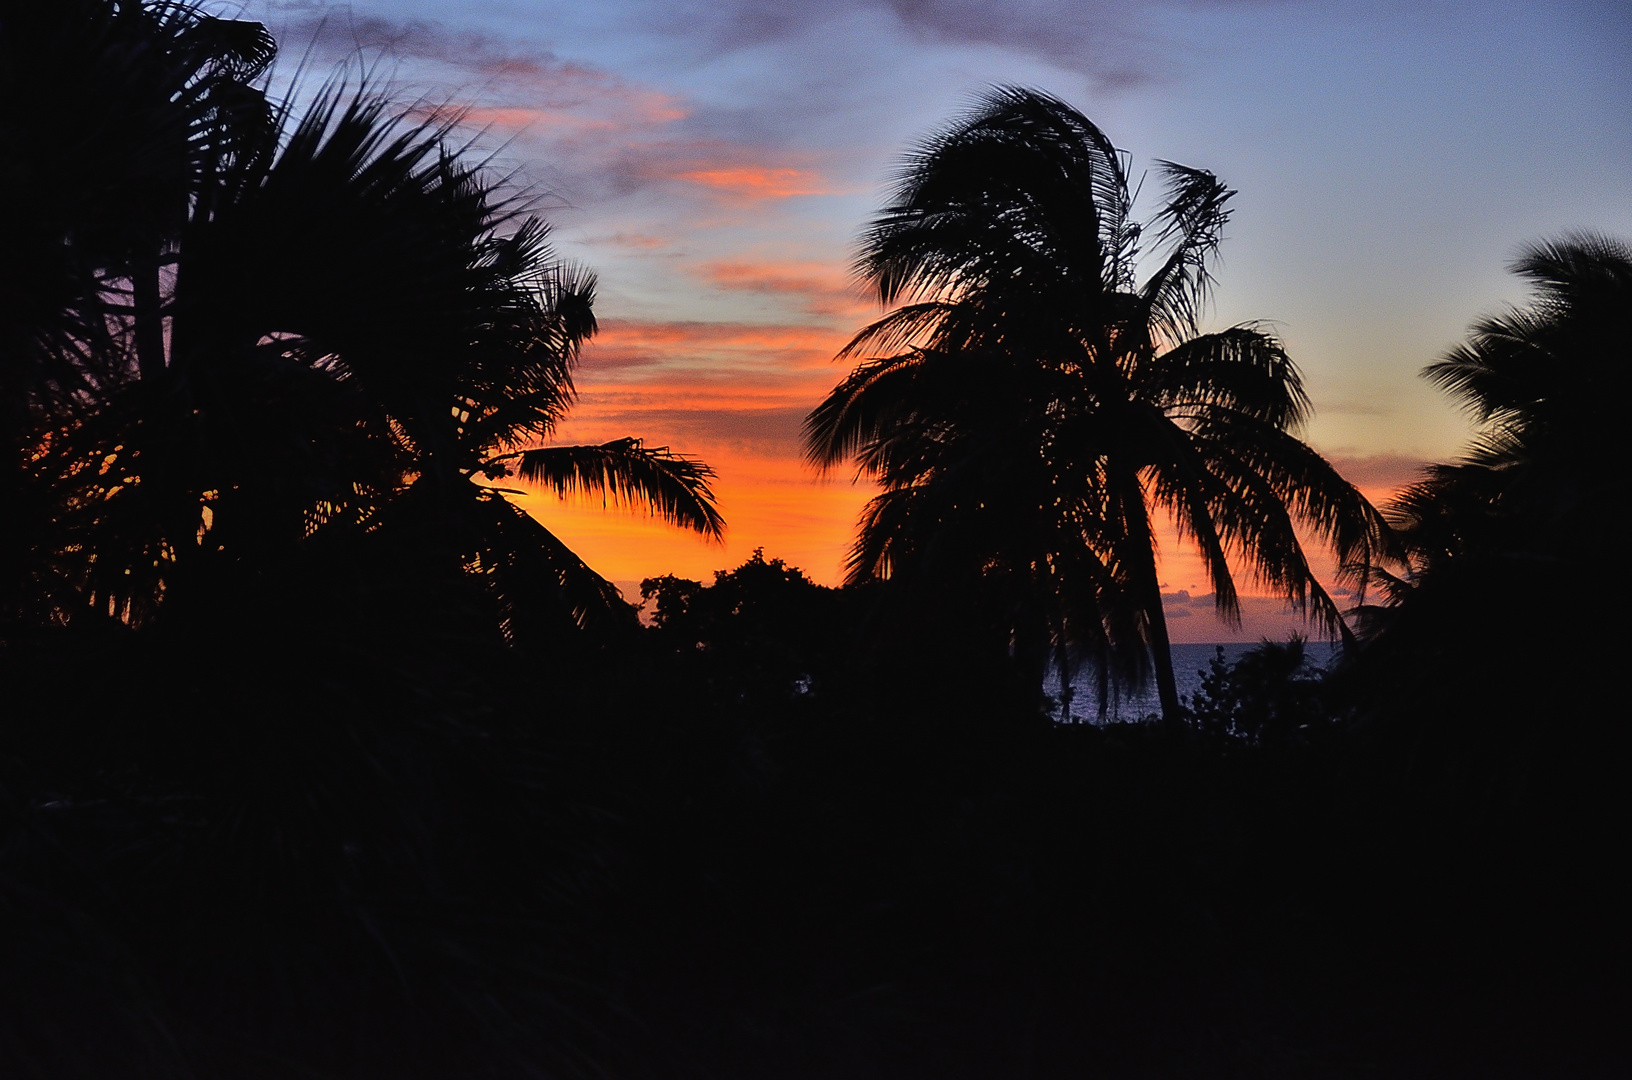 Twilight at Cuba Varadero 